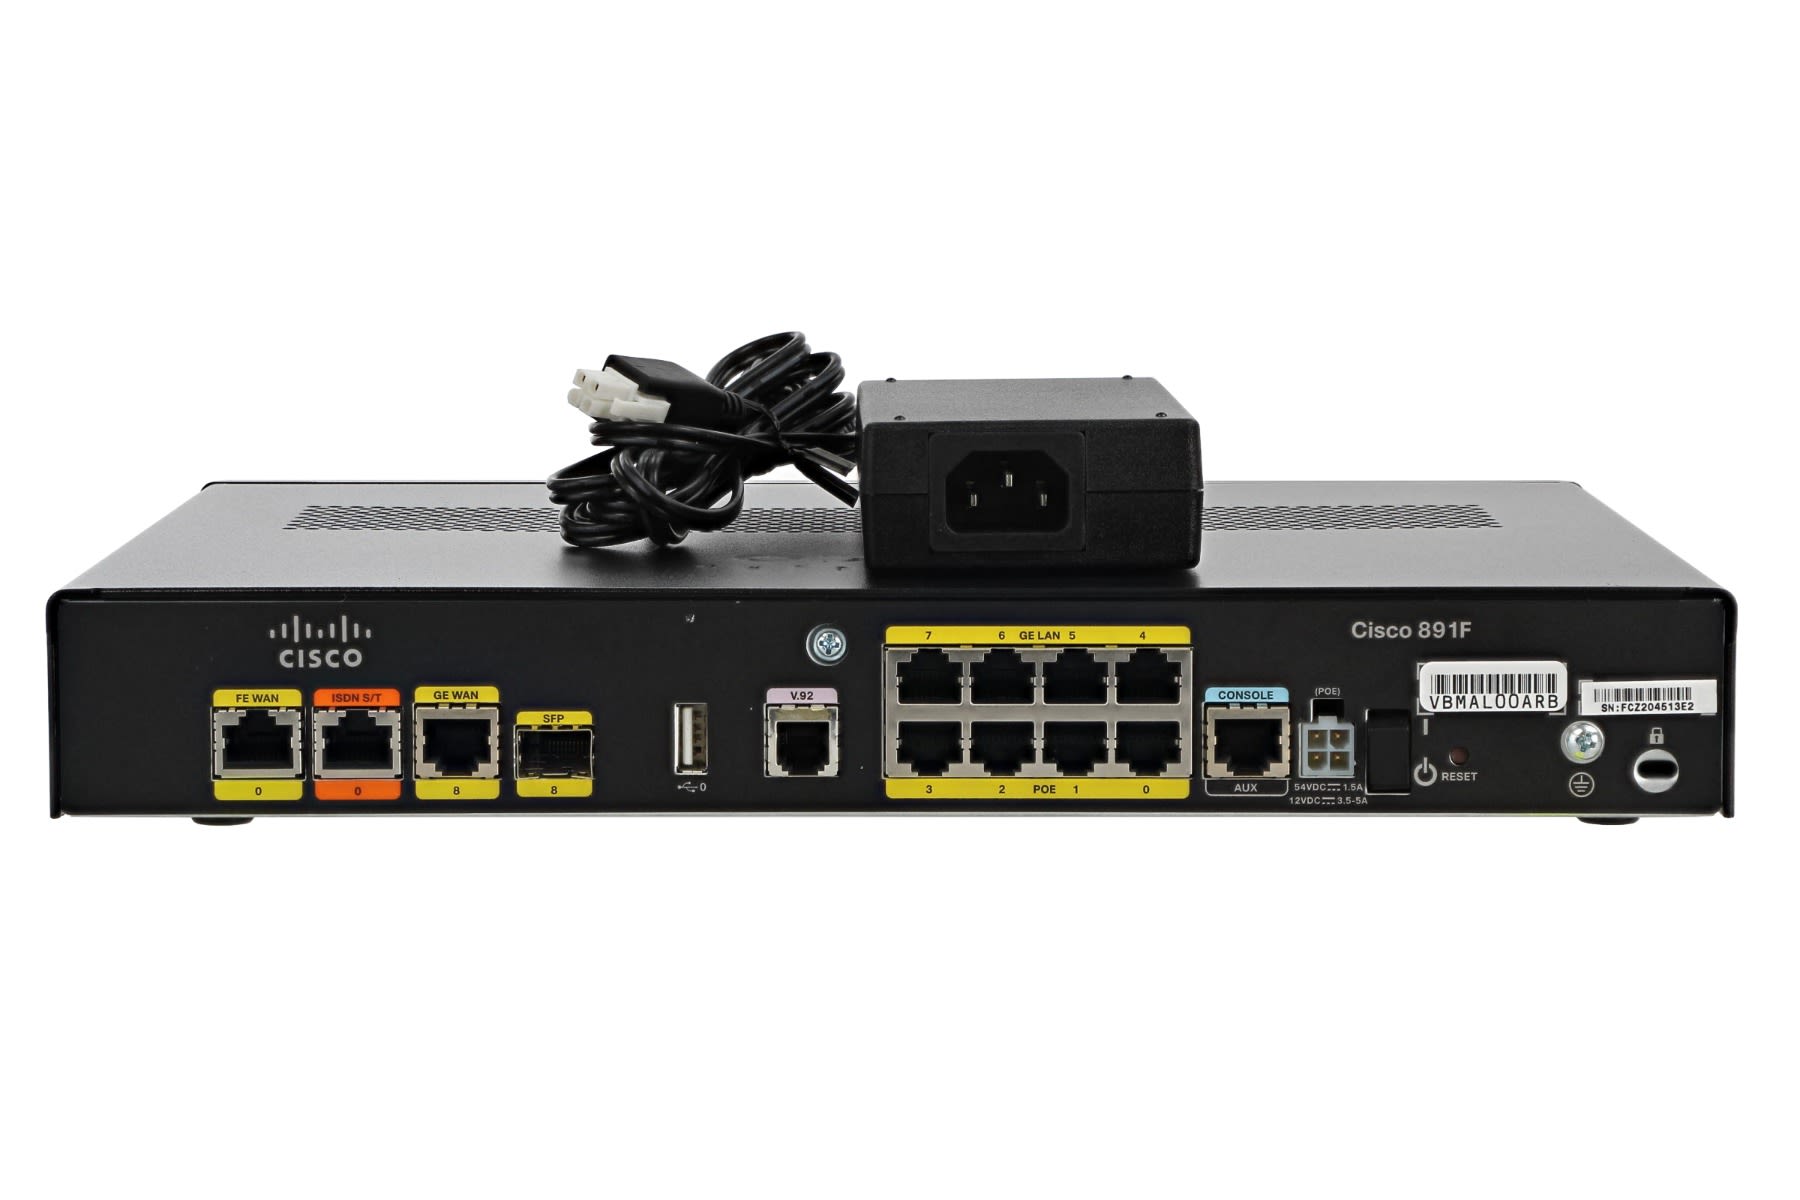 Cisco Security Router